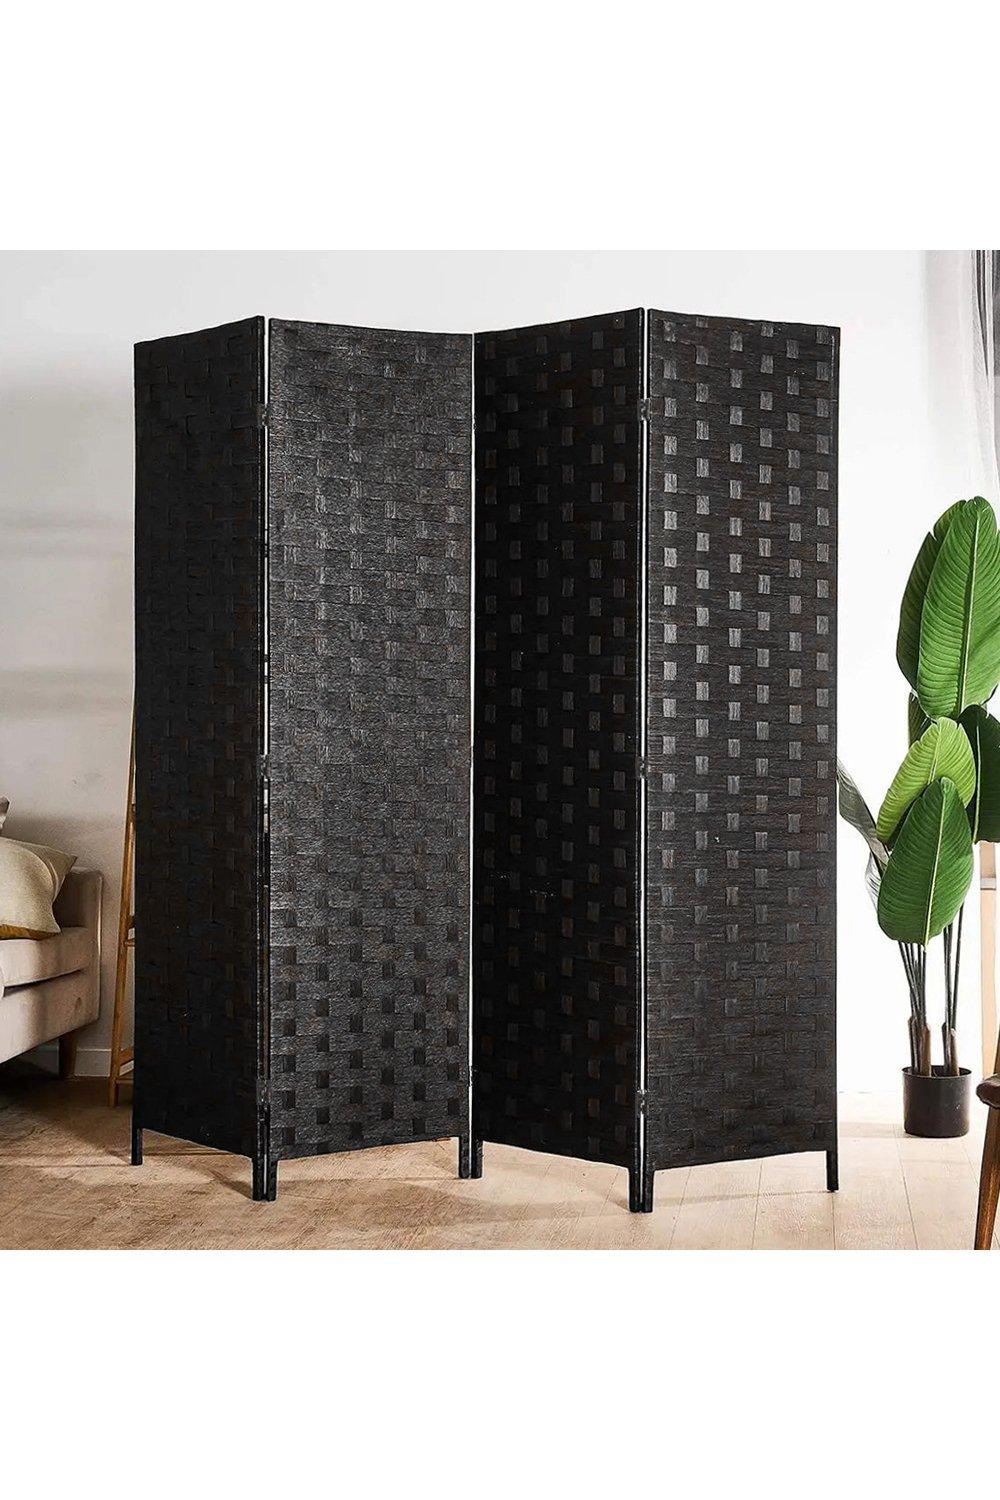 4-Panel Black Woven Fiber Folding Room Divider